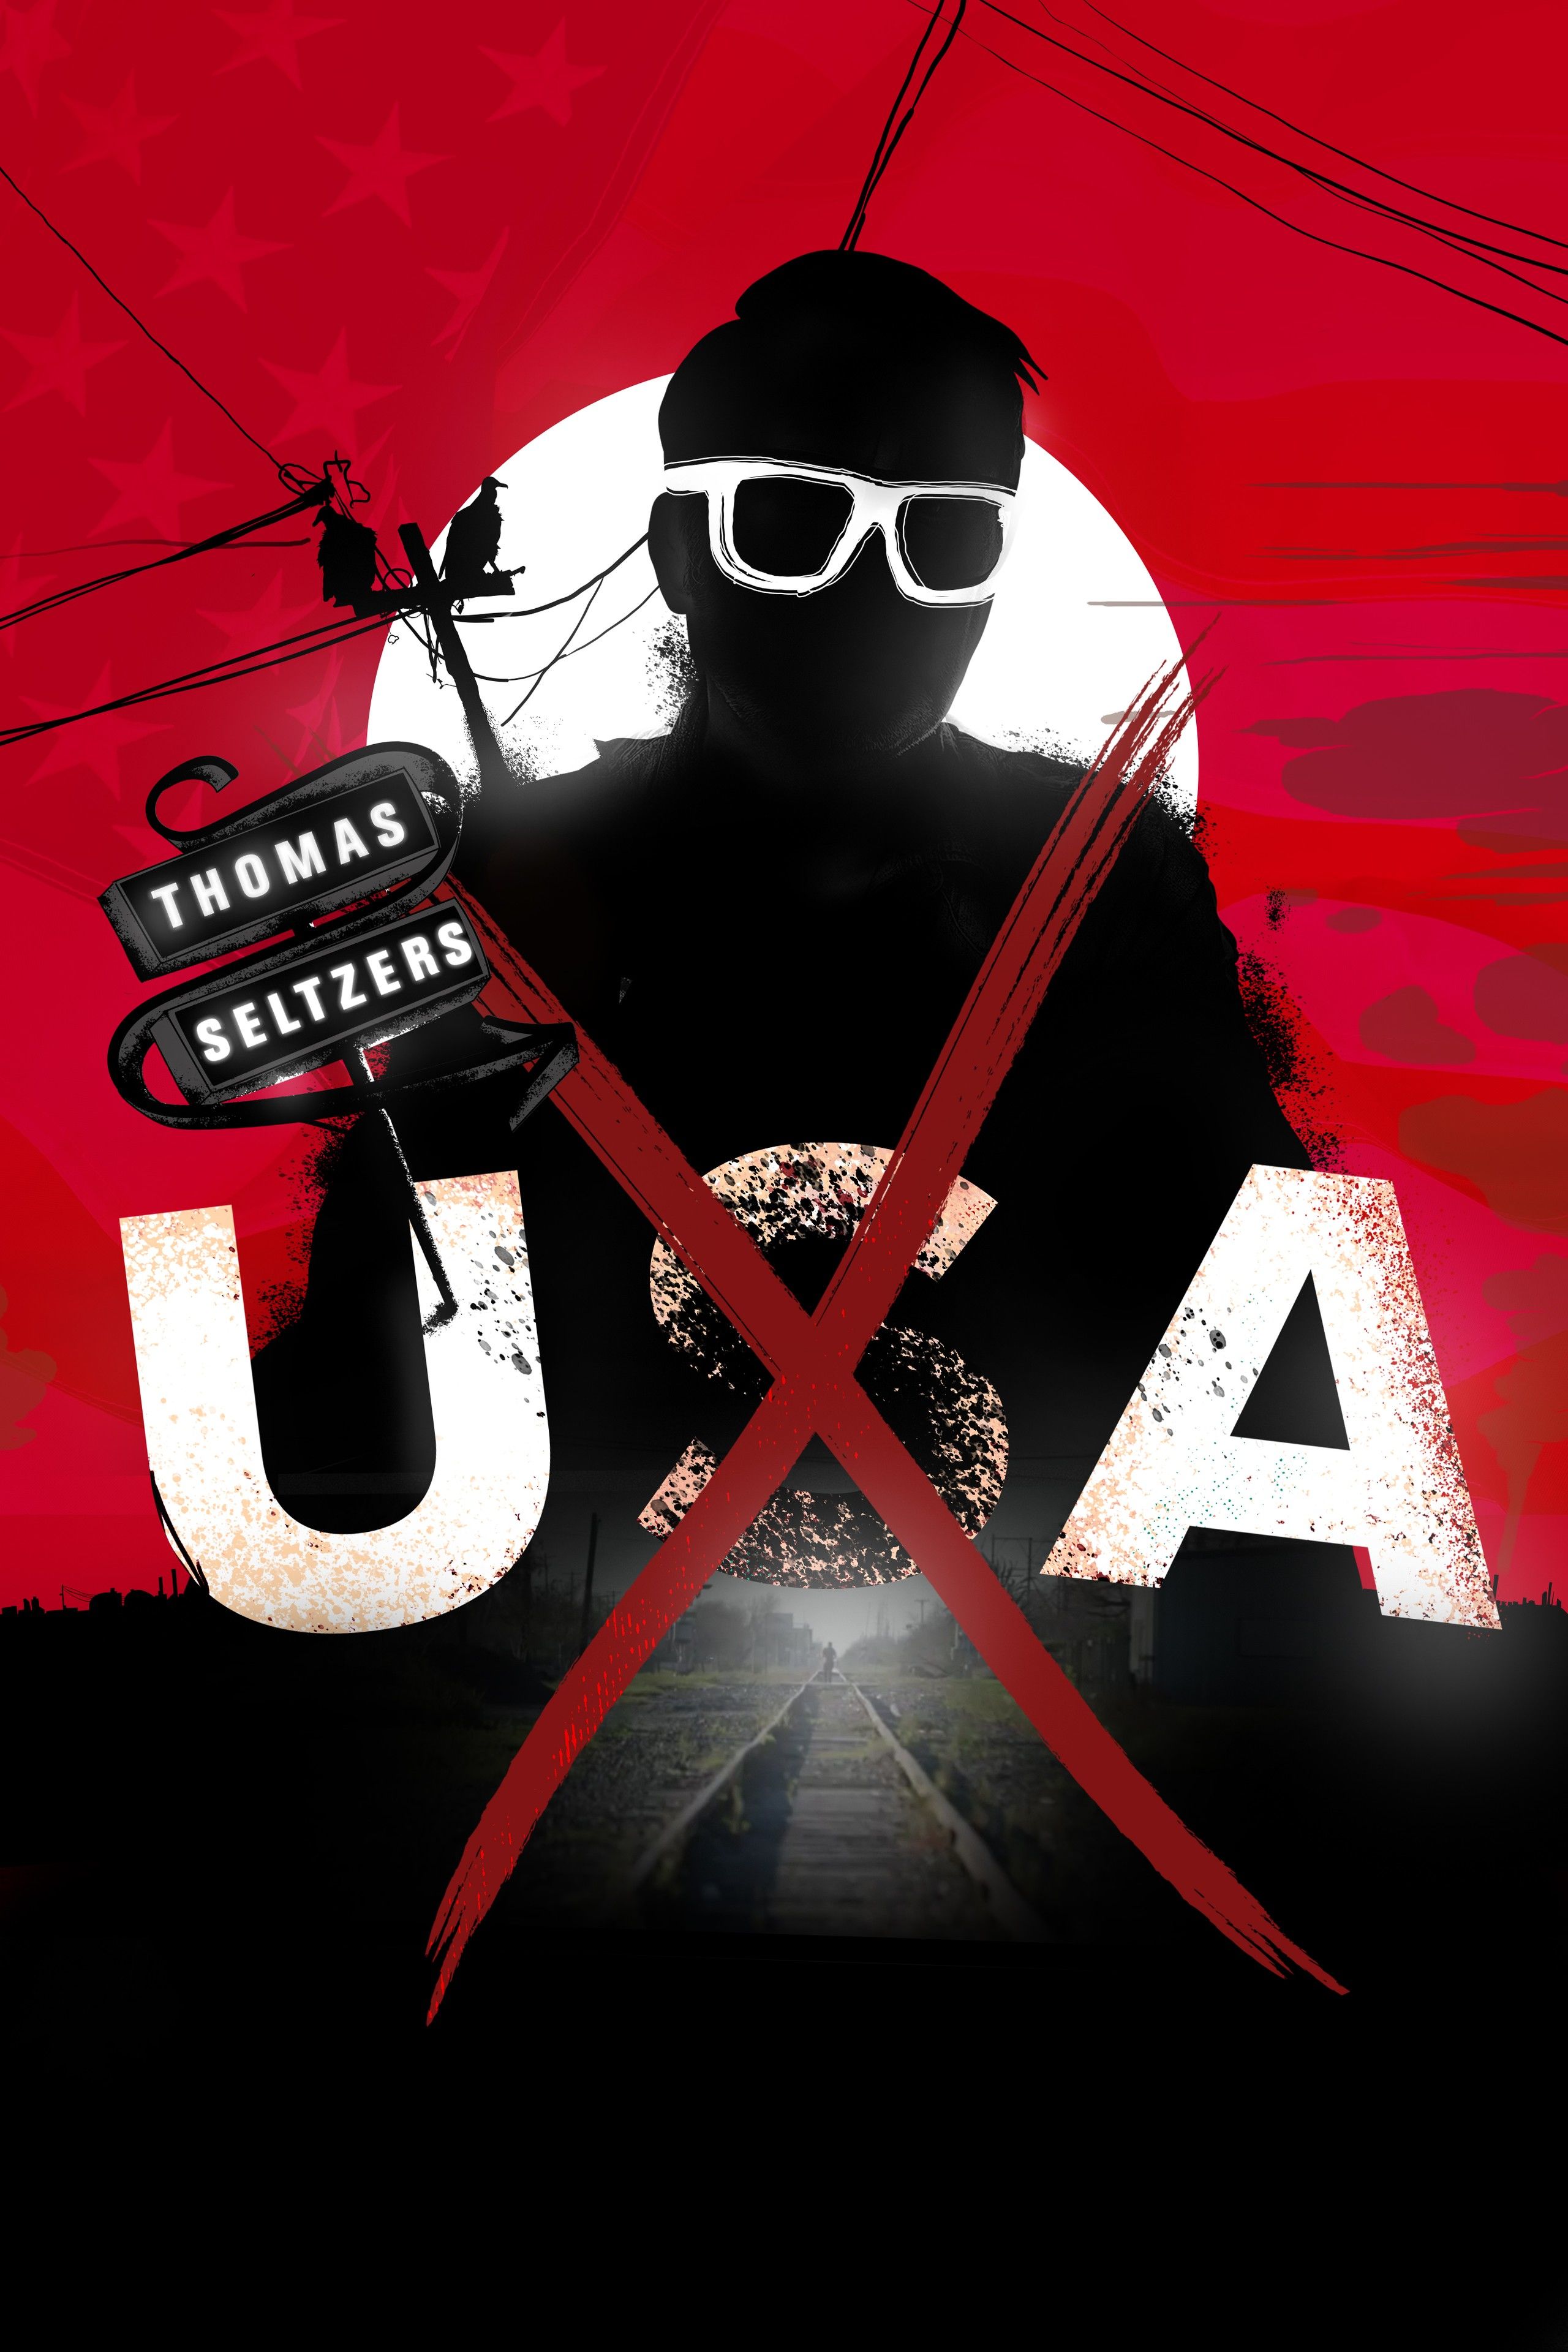 UXA - Thomas Seltzers Amerika ne zaman